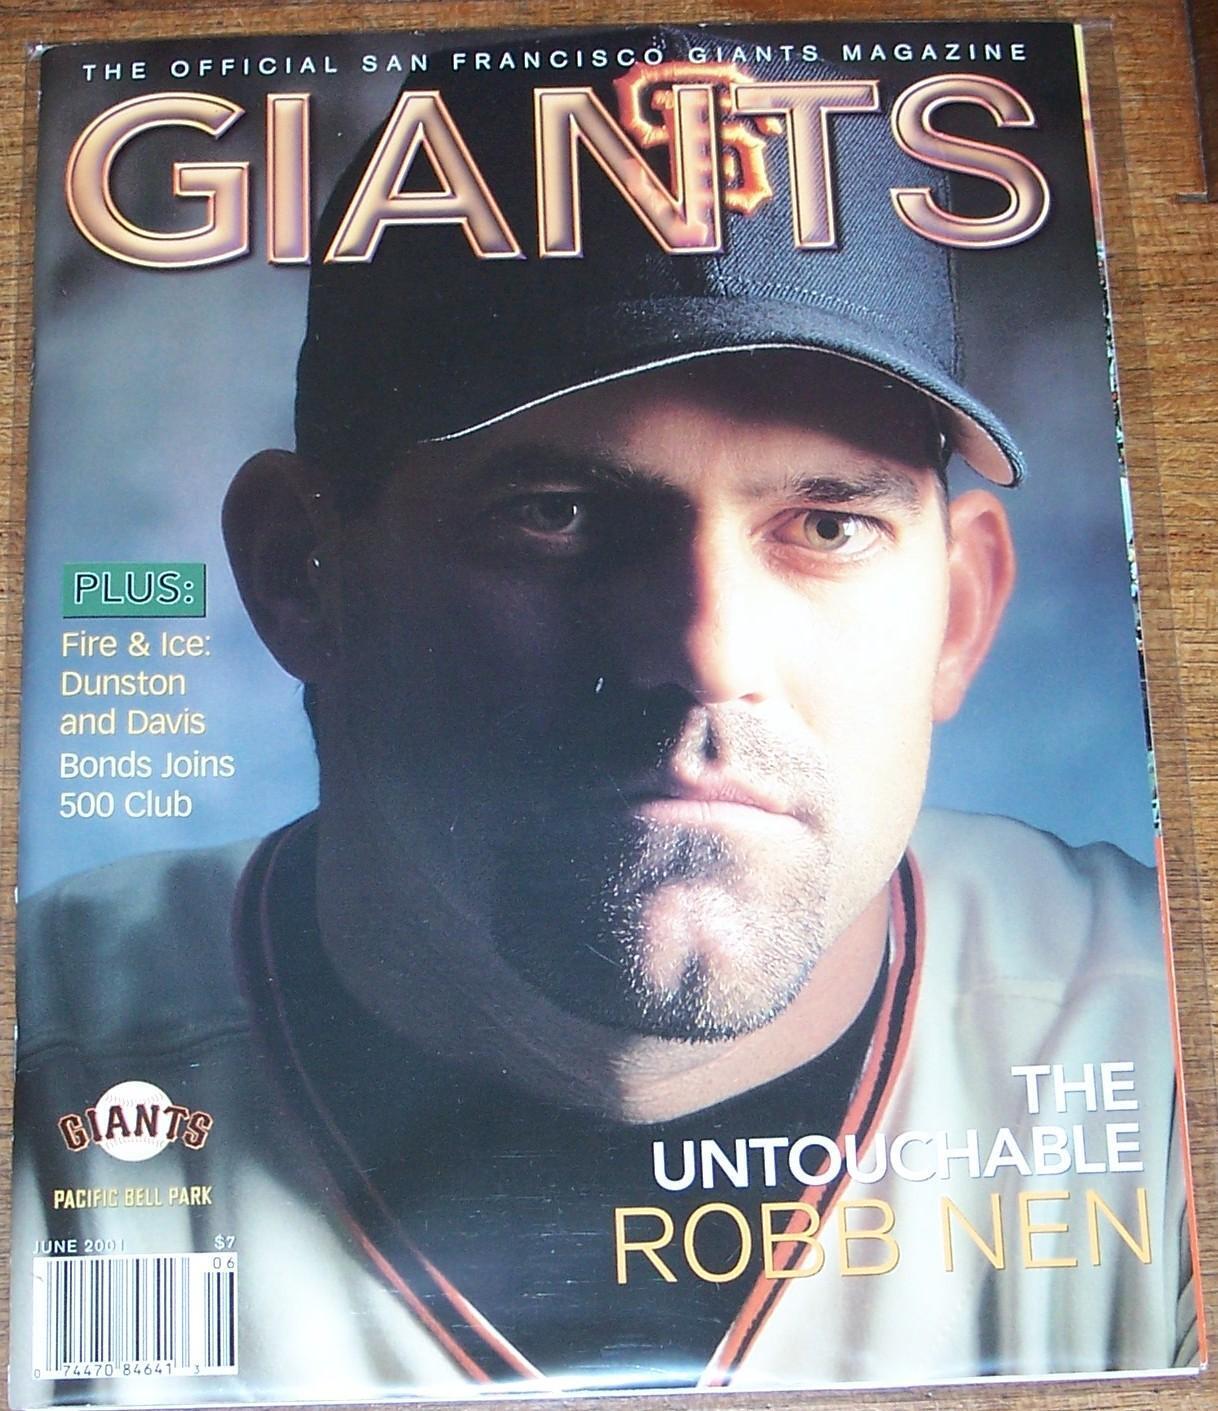 S F Giants Magazine / S.F GIANTS MAGAZINE JUNE 2001